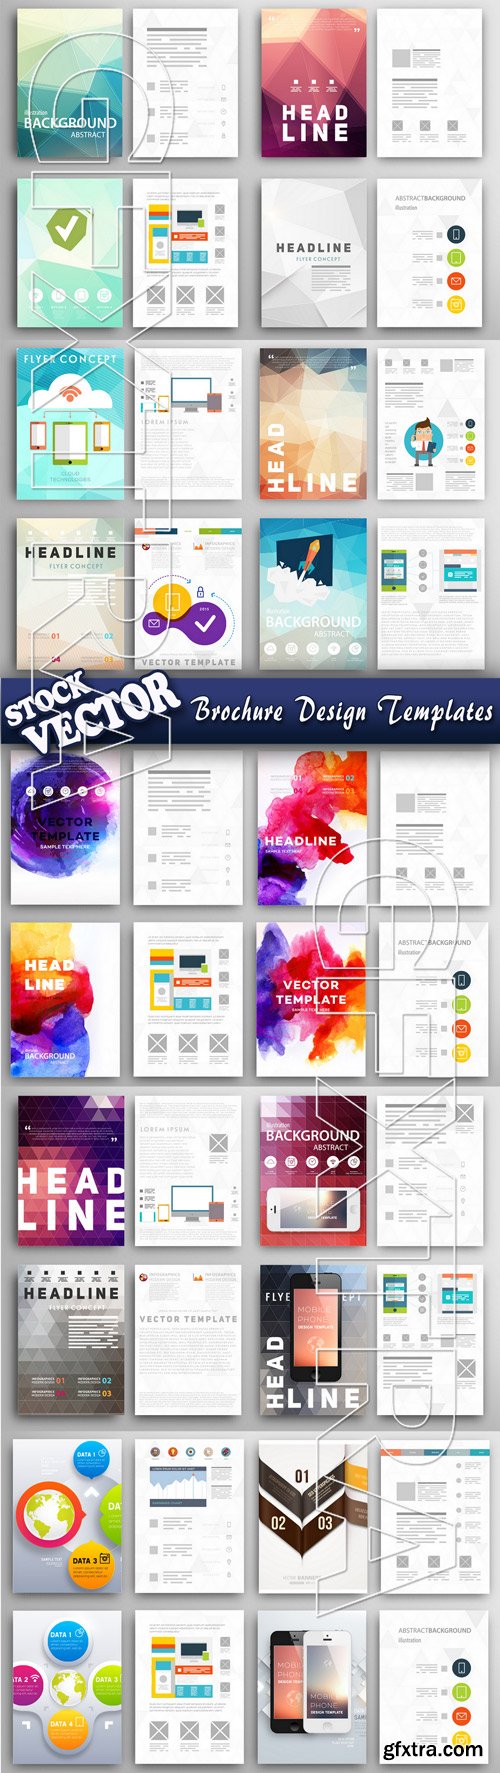 Stock Vector - Brochure Design Templates